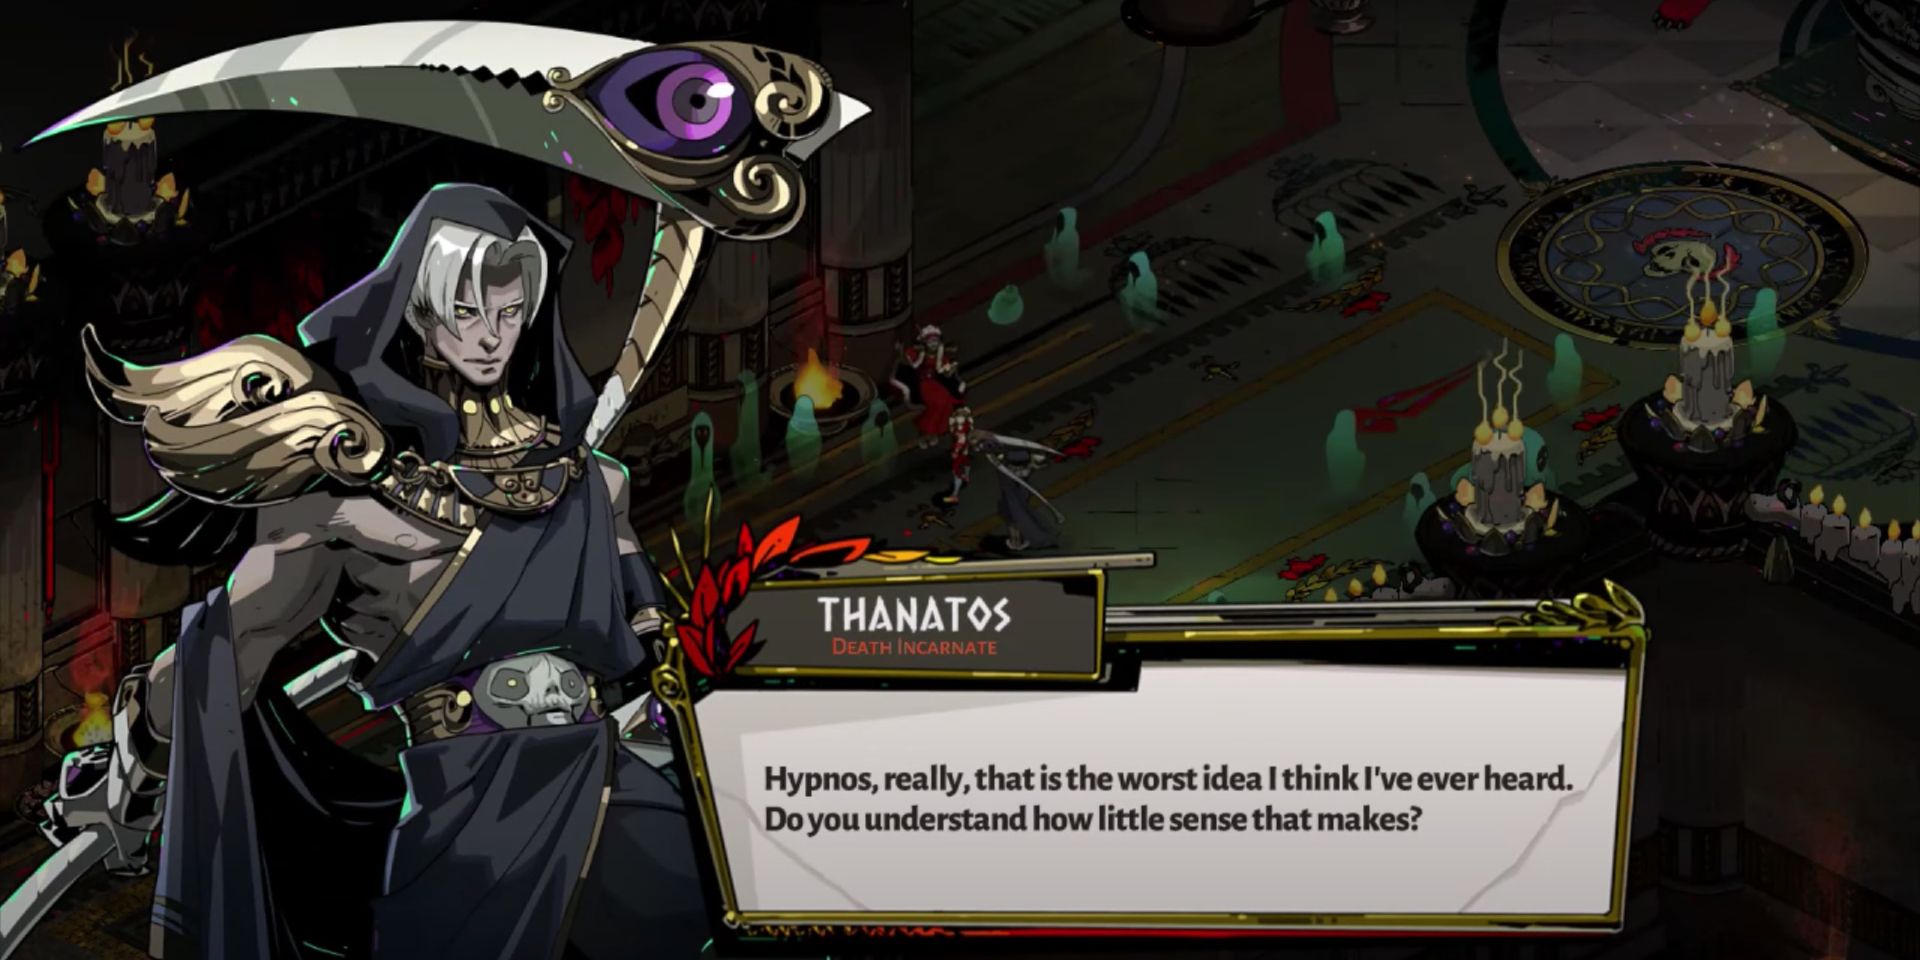 thanatos criticizing hypnos